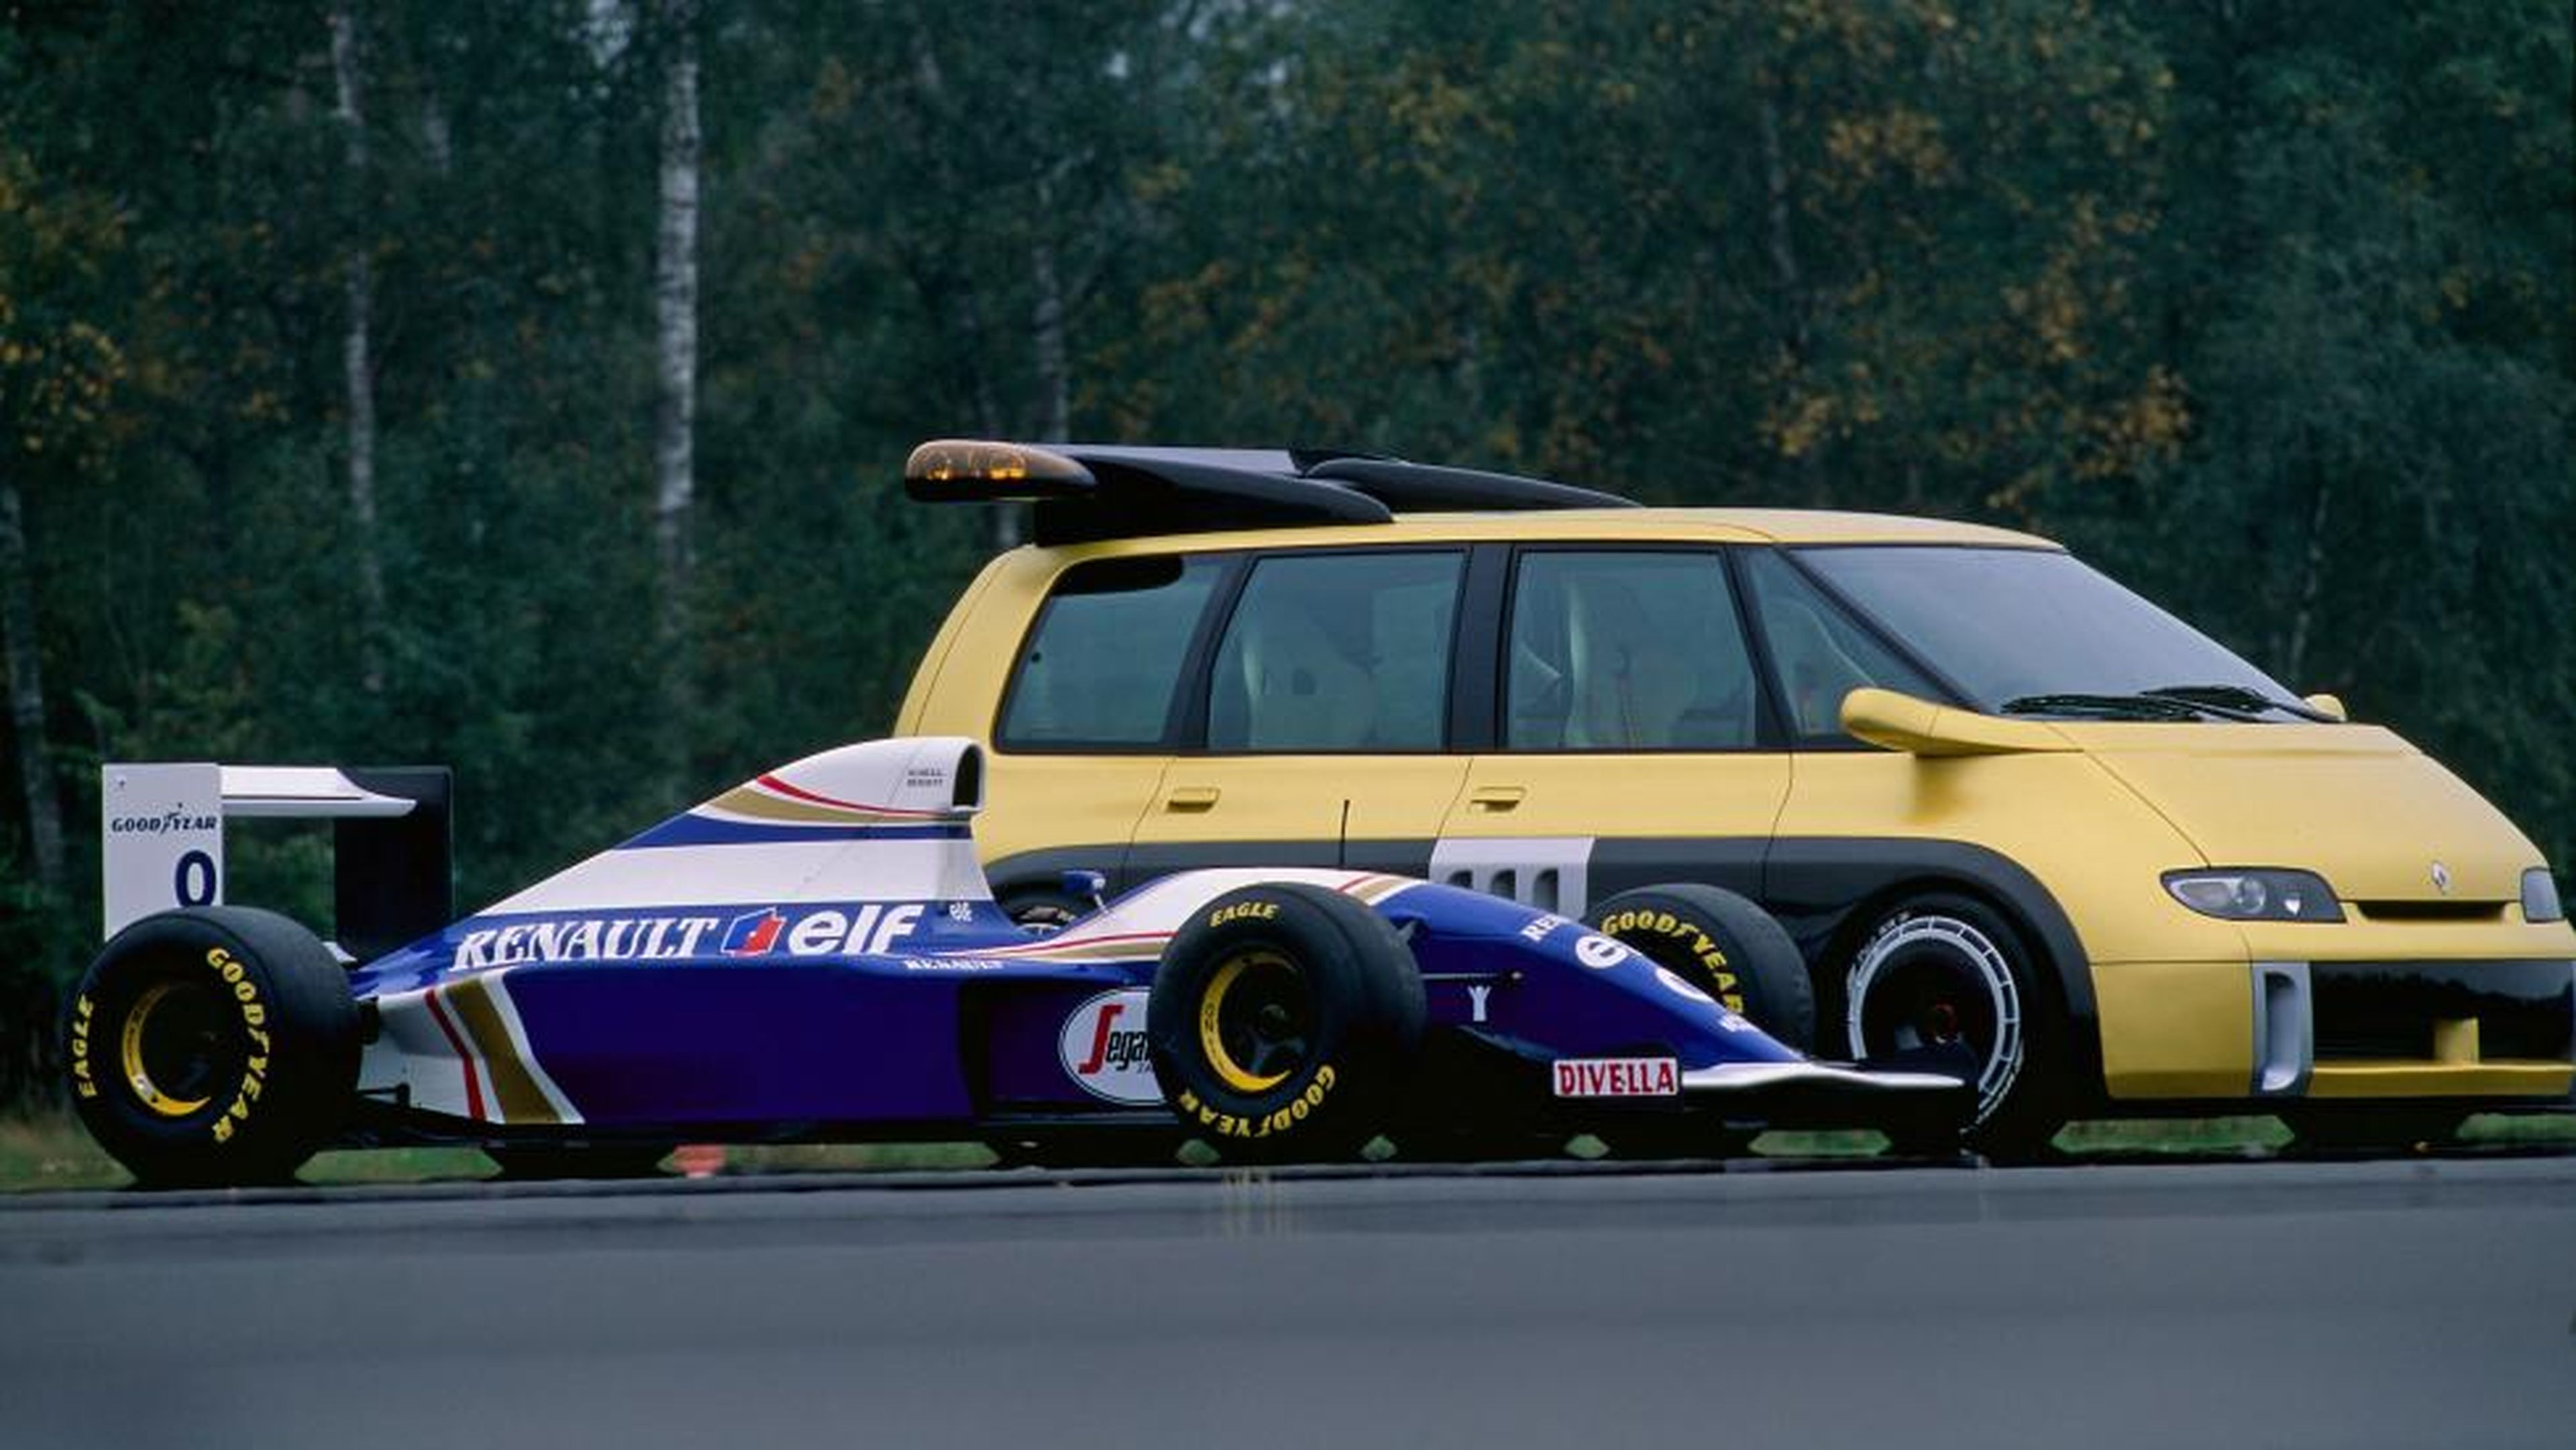 Renault Espace F1 original